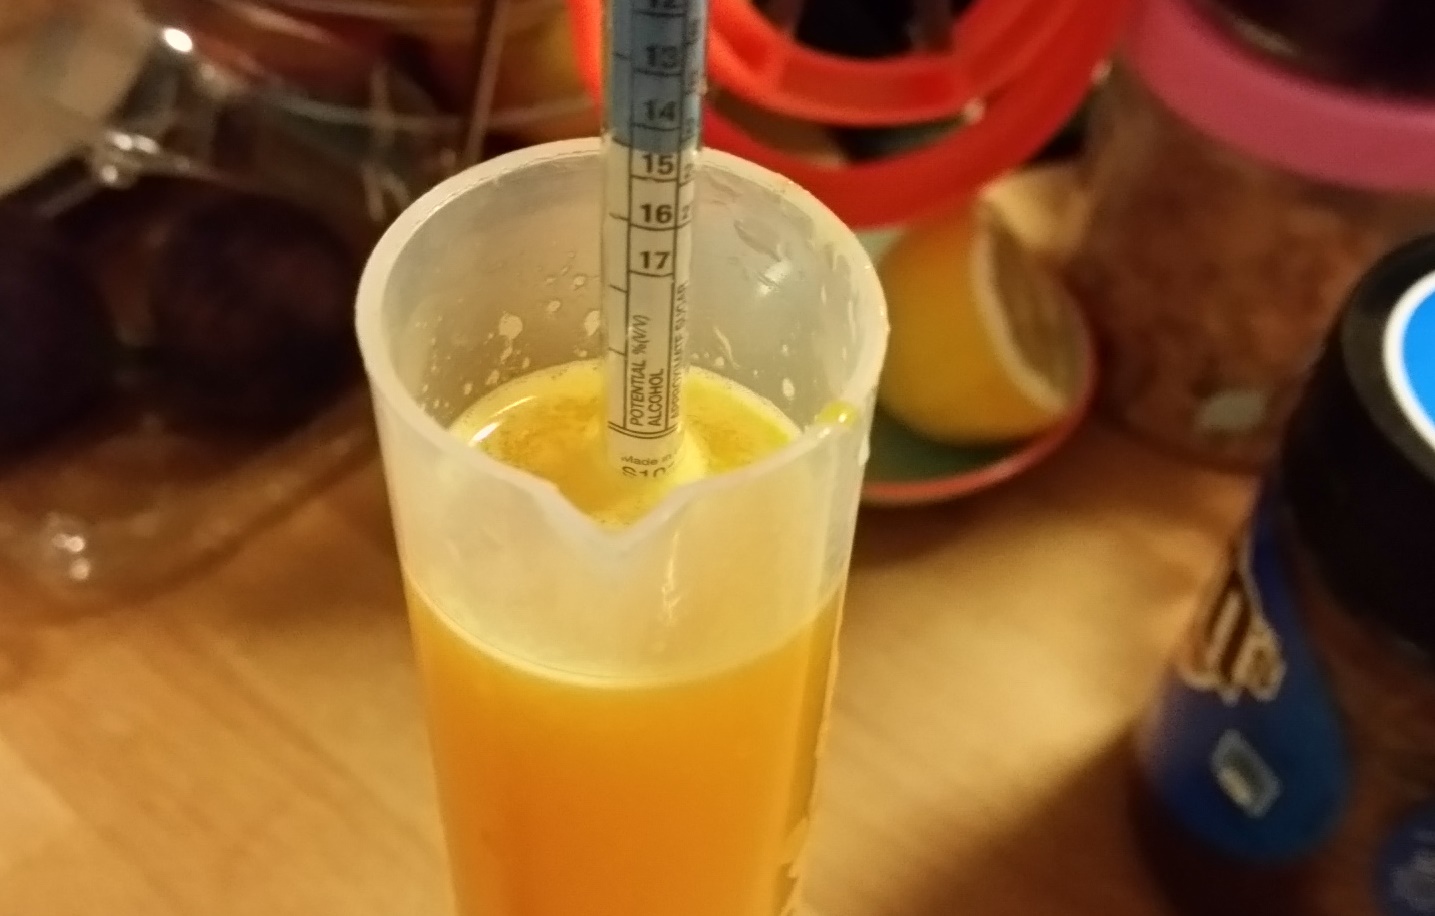 wine hydrometer in mandarin syrup